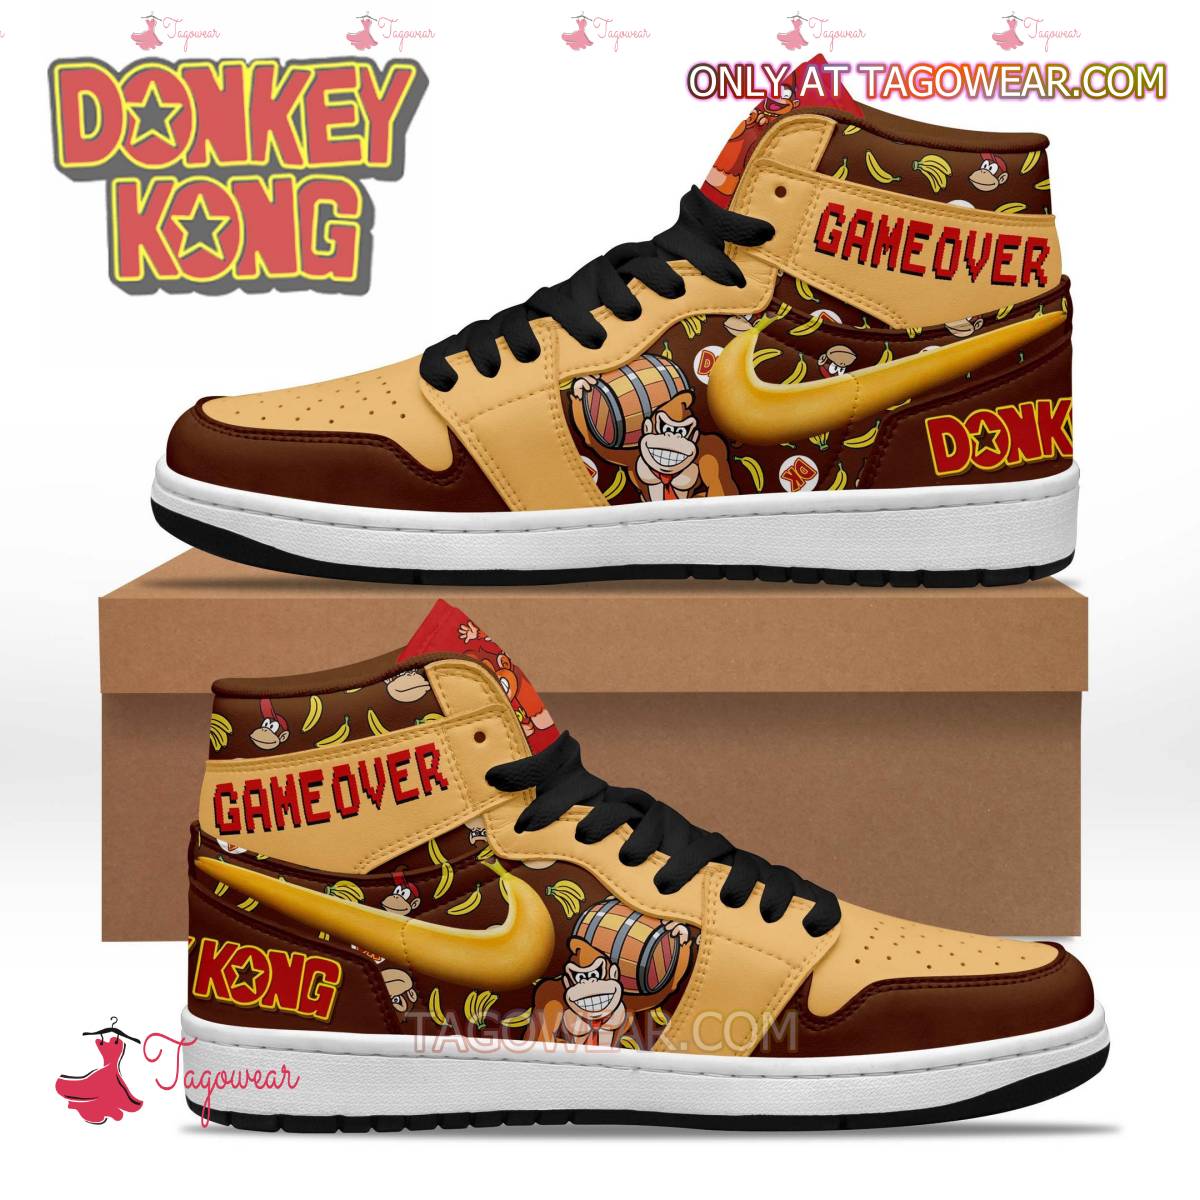 Donkey Kong Game Over Air Jordan High Top Shoes